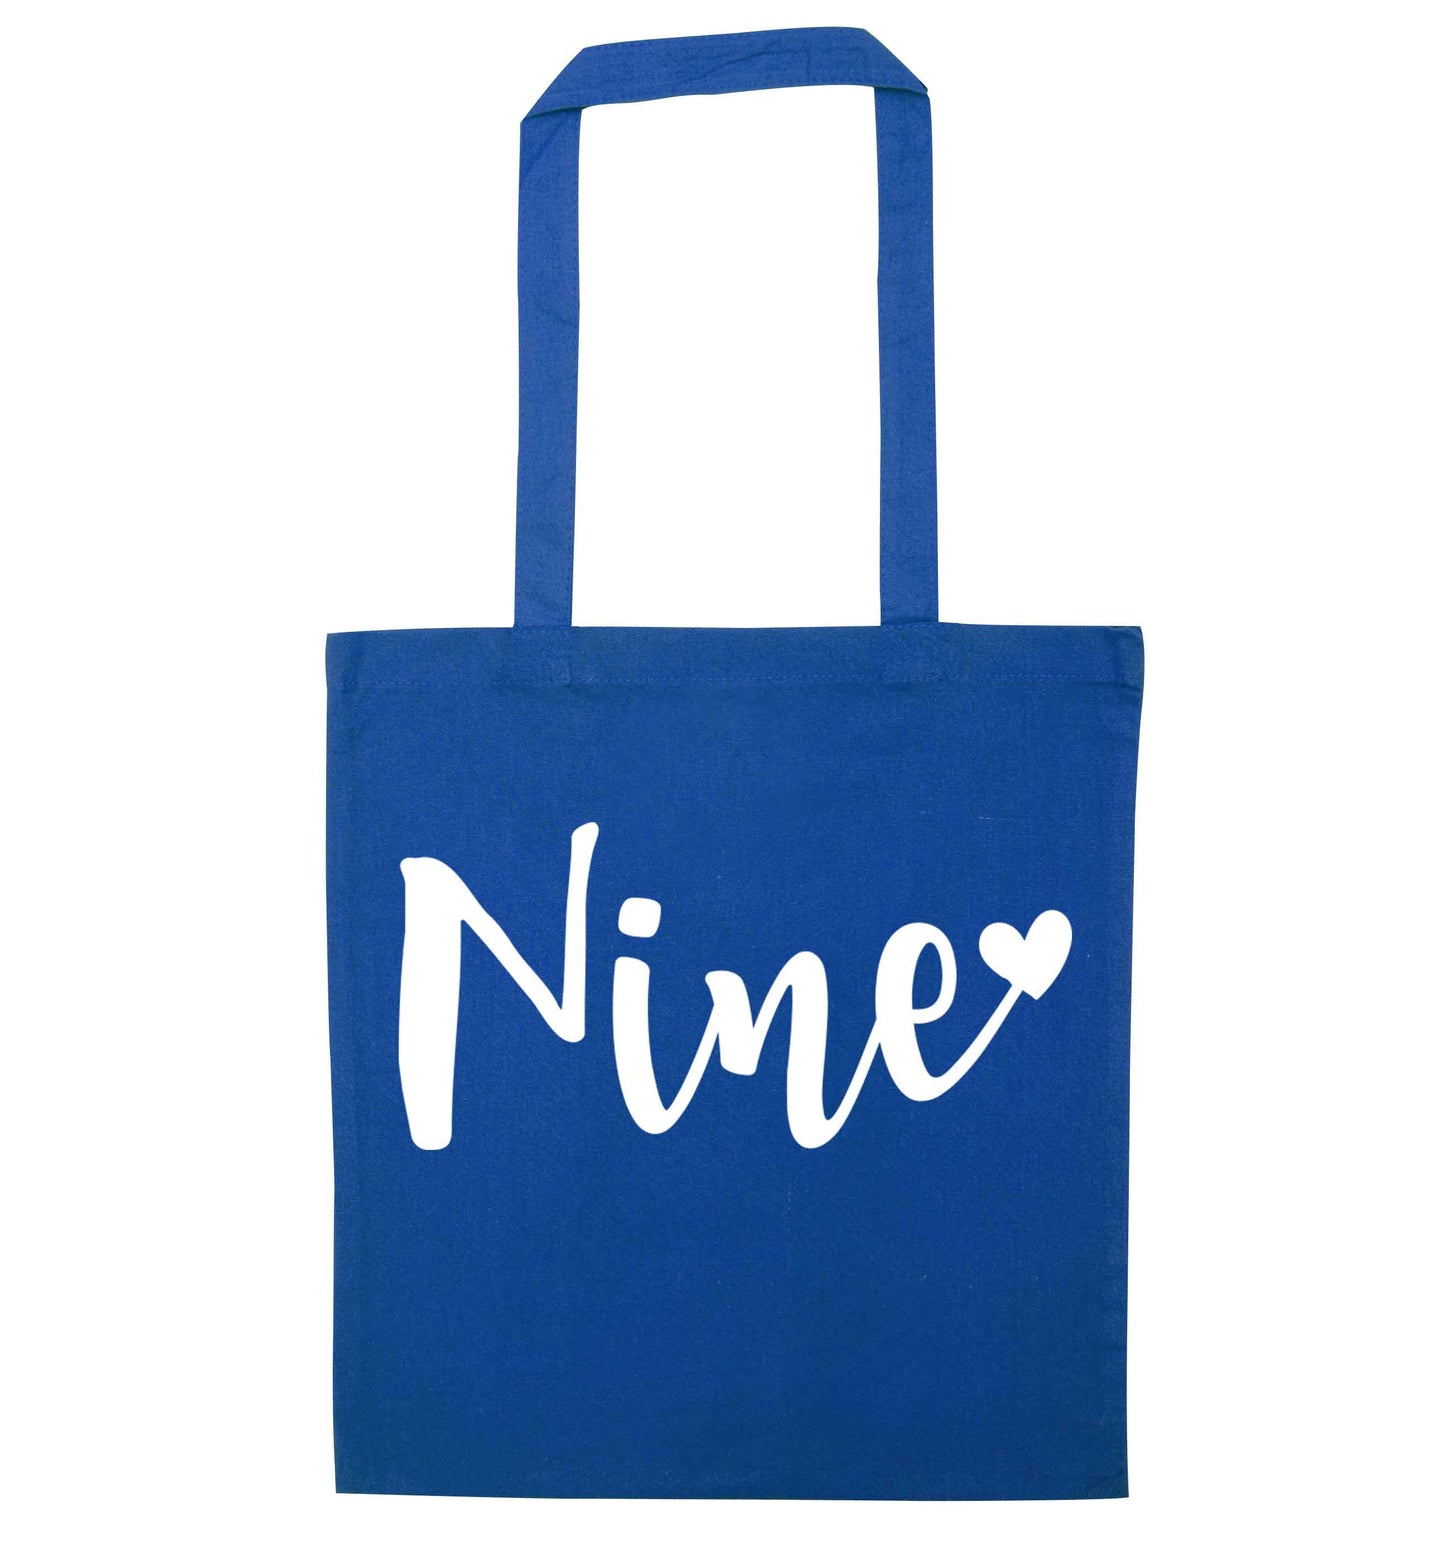 Nine and heart blue tote bag